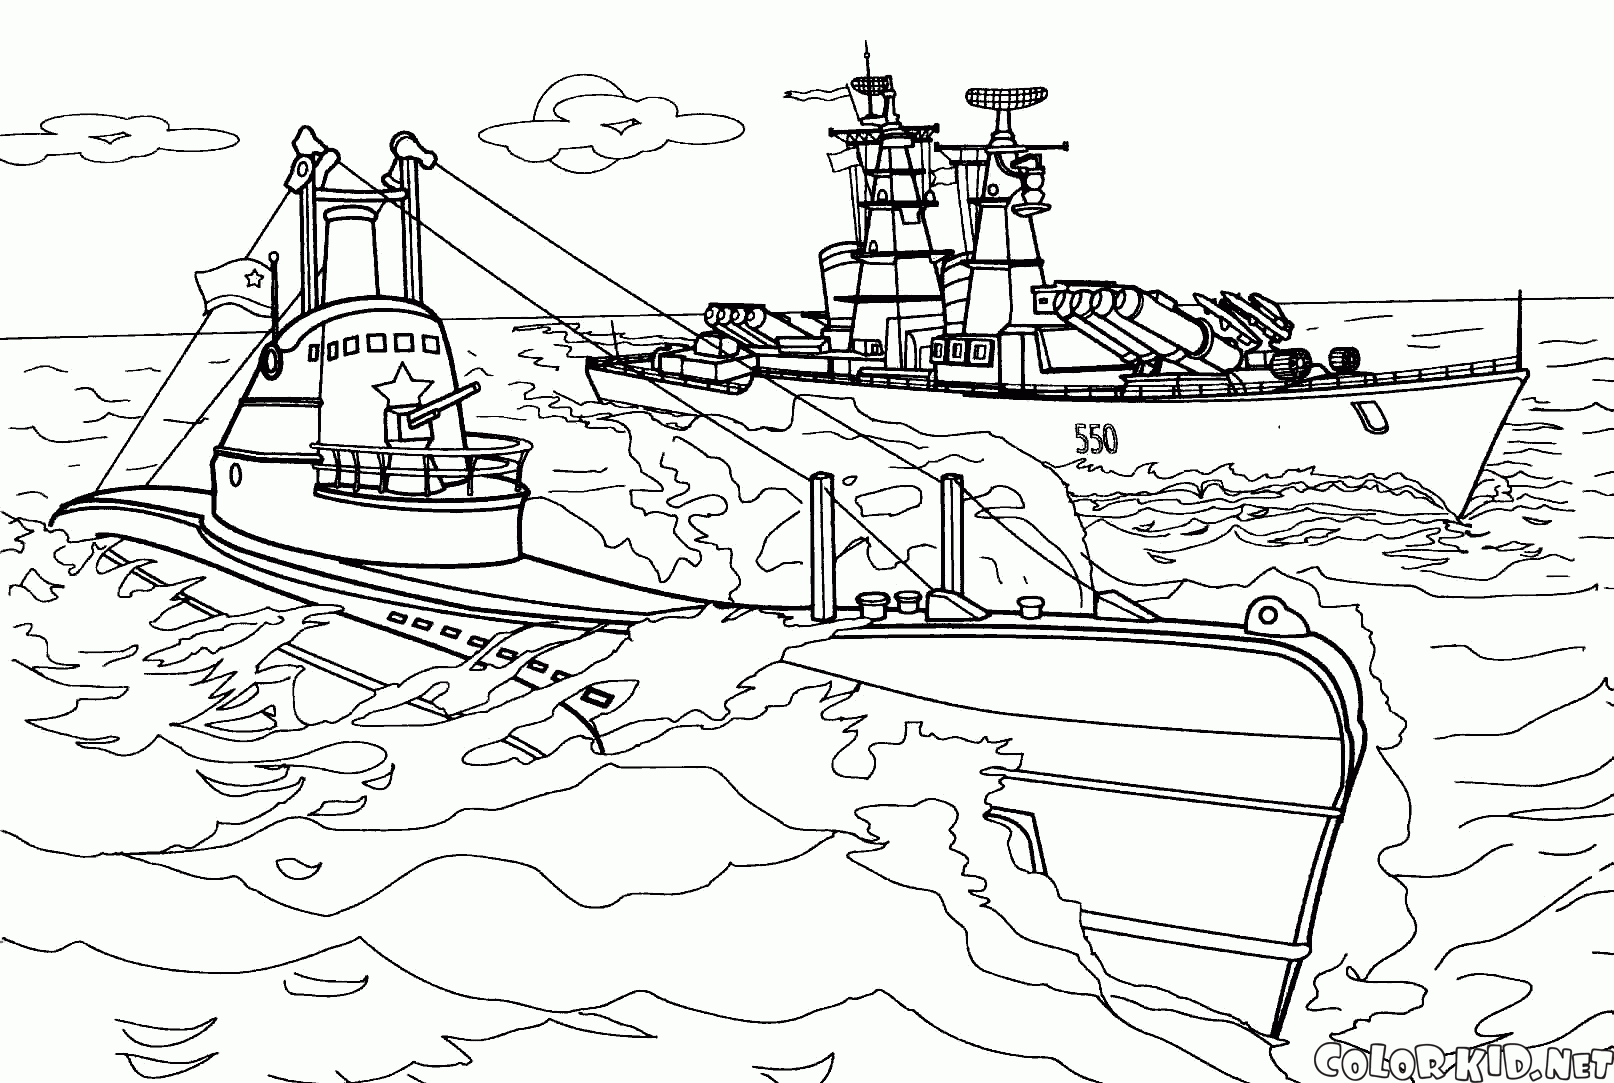 SC-402 Okręt podwodny